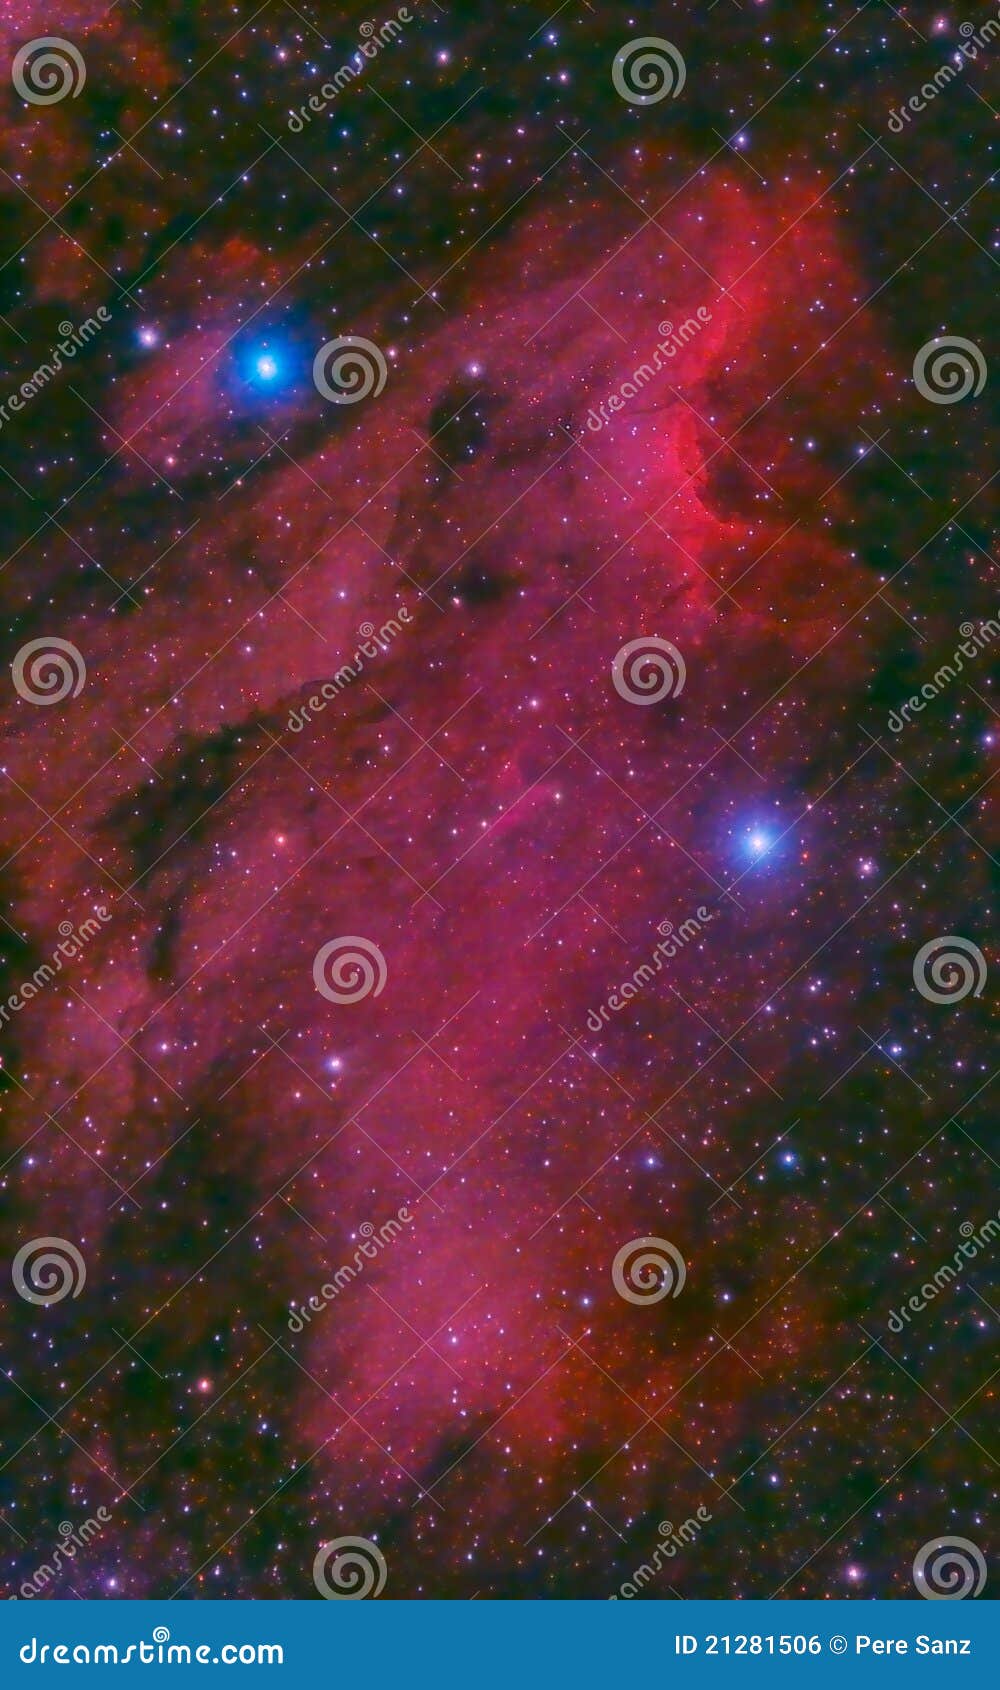 pelican nebula in cygnus